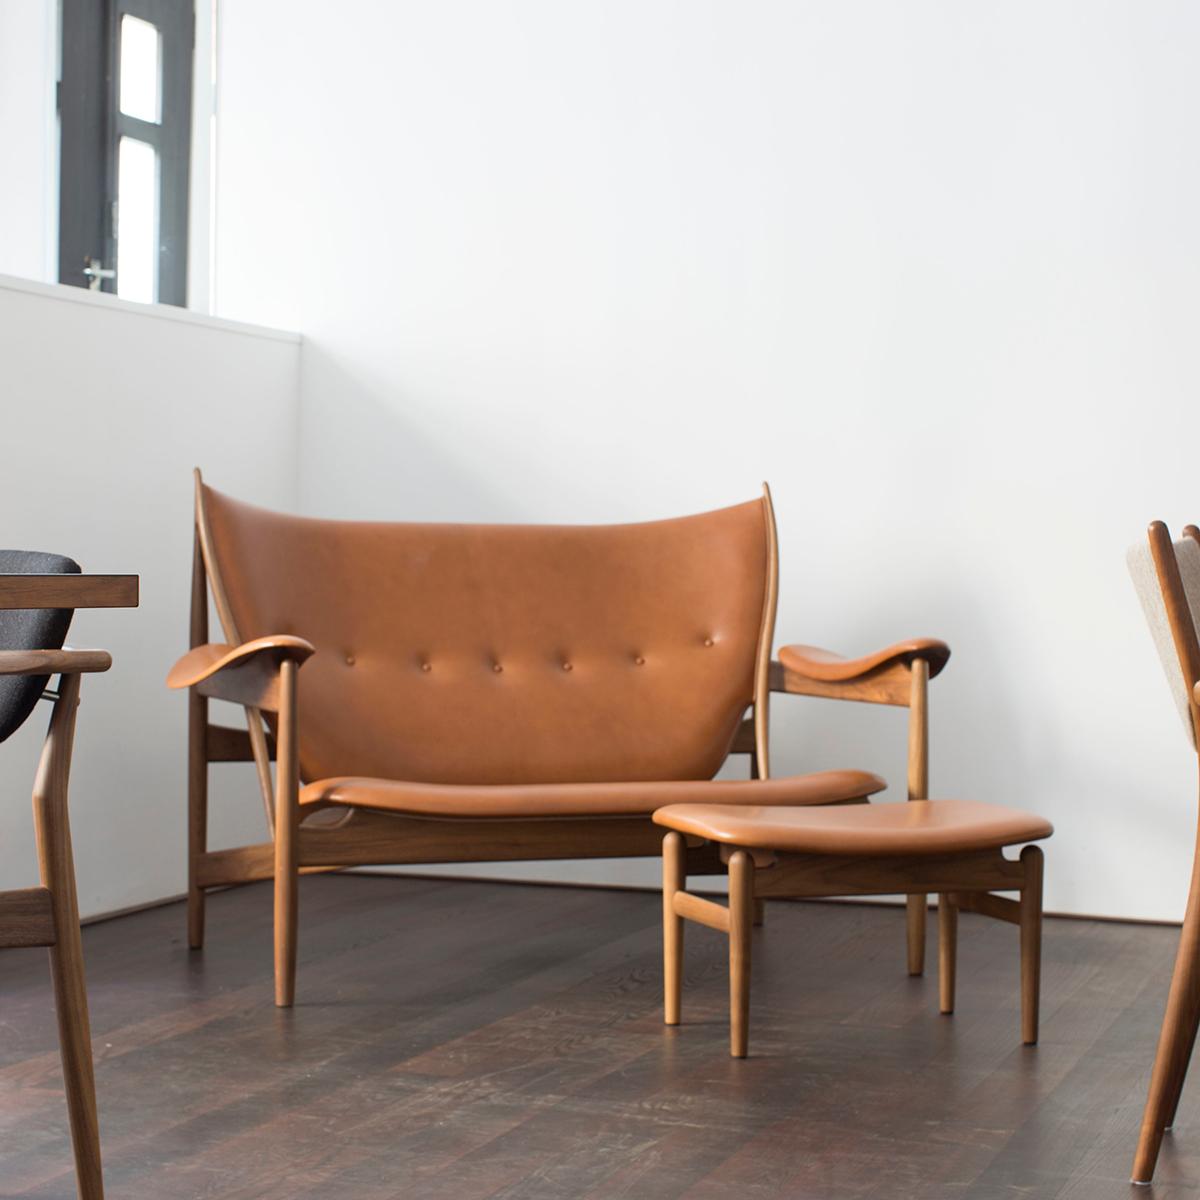 Sofa designed by Finn Juhl in 1949, relaunched in 2013.
Chieftain footstool designed by Finn Juhl in 1953, relaunched in 2015.
Manufactured by House of Finn Juhl in Denmark.

Alongside the impressive Chieftain Chair, Finn Juhl and cabinetmaker